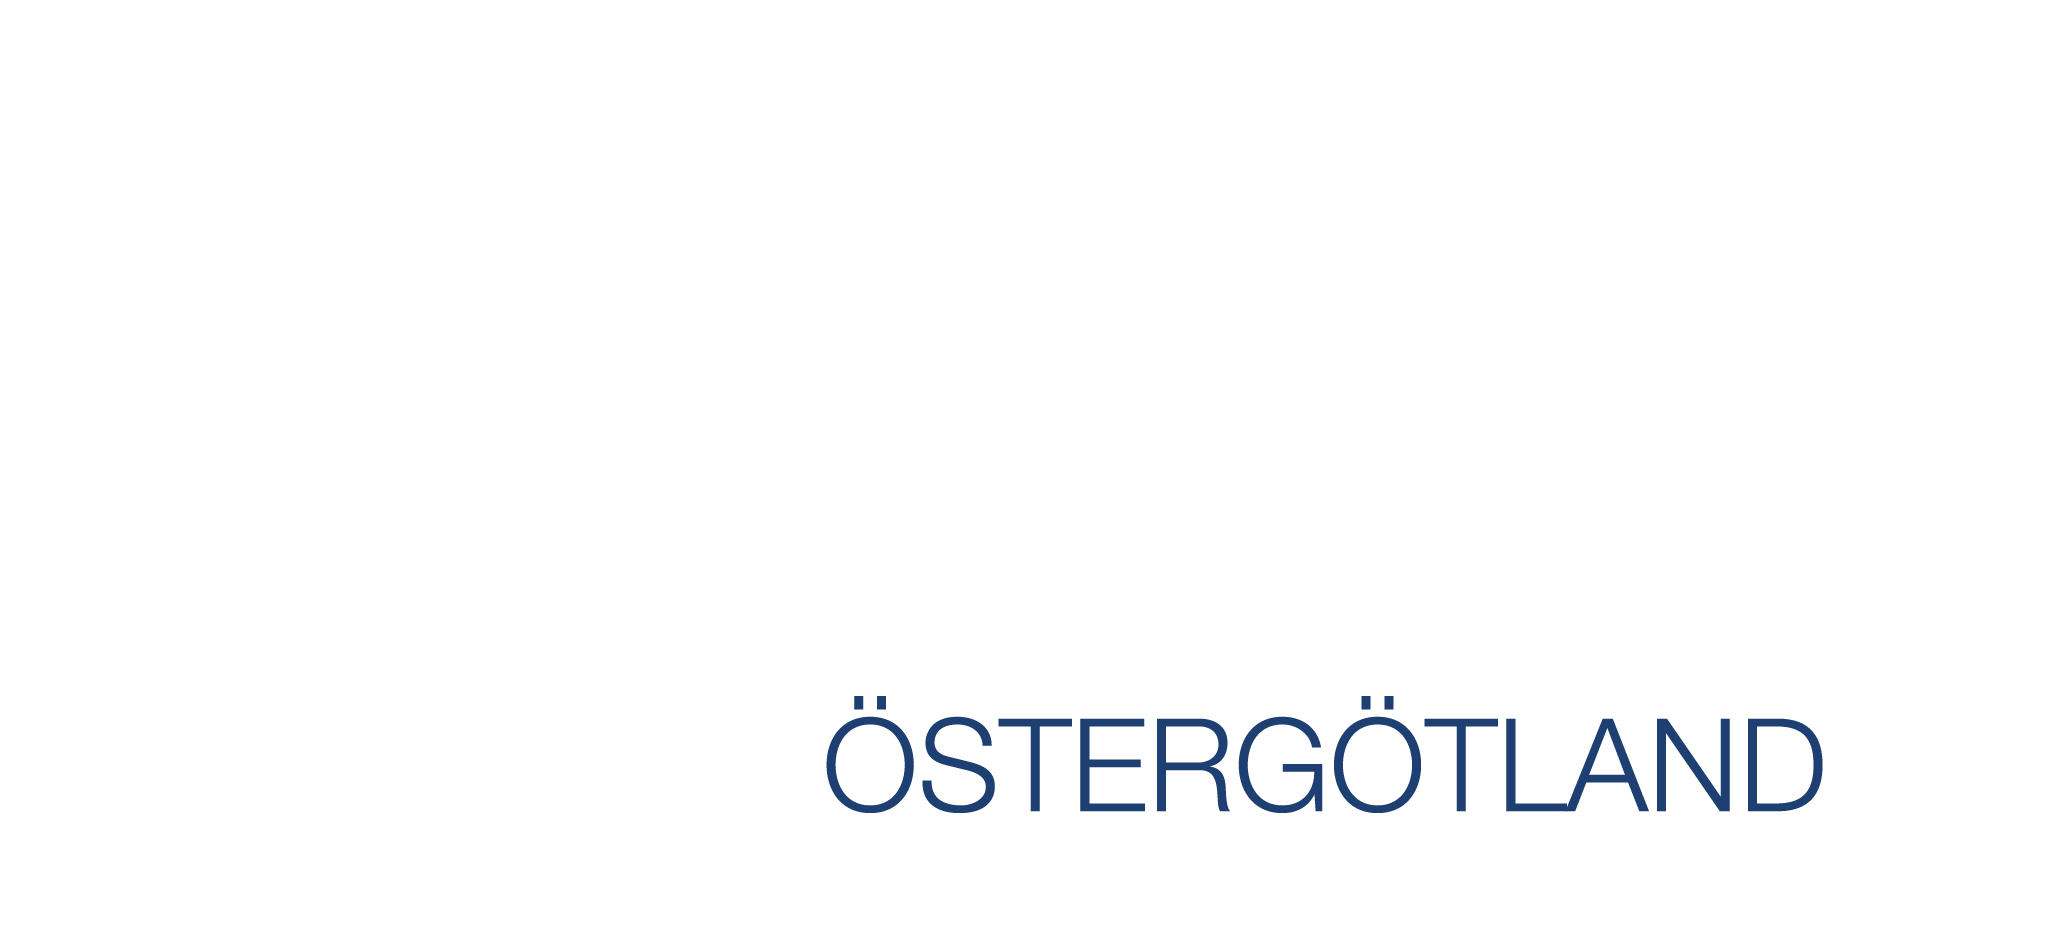 Green Östergötland